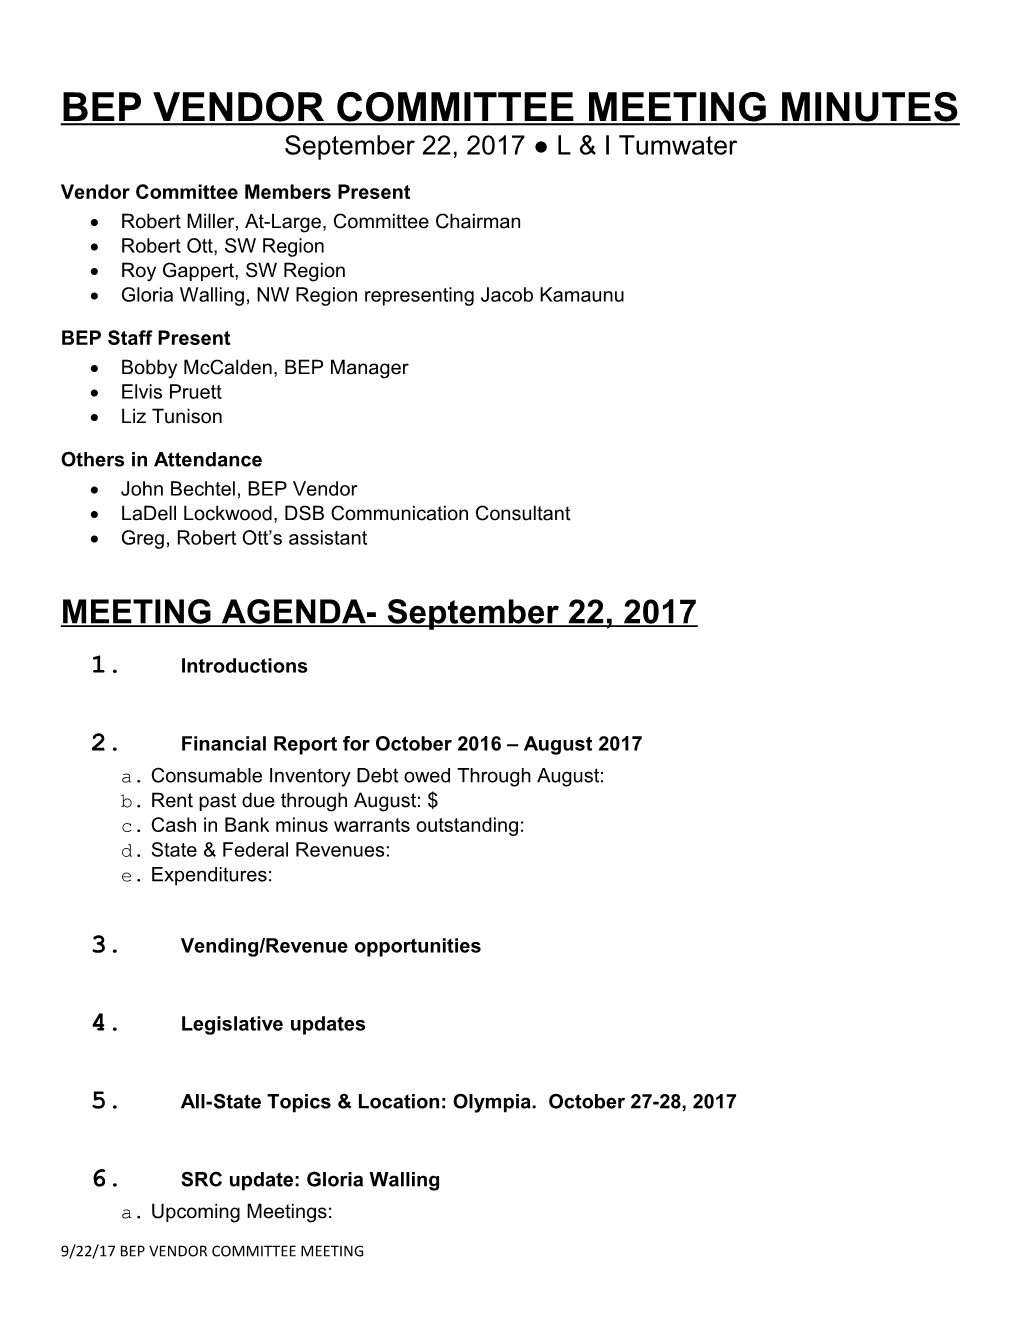 Vendor Committee Meeting Minutes s1